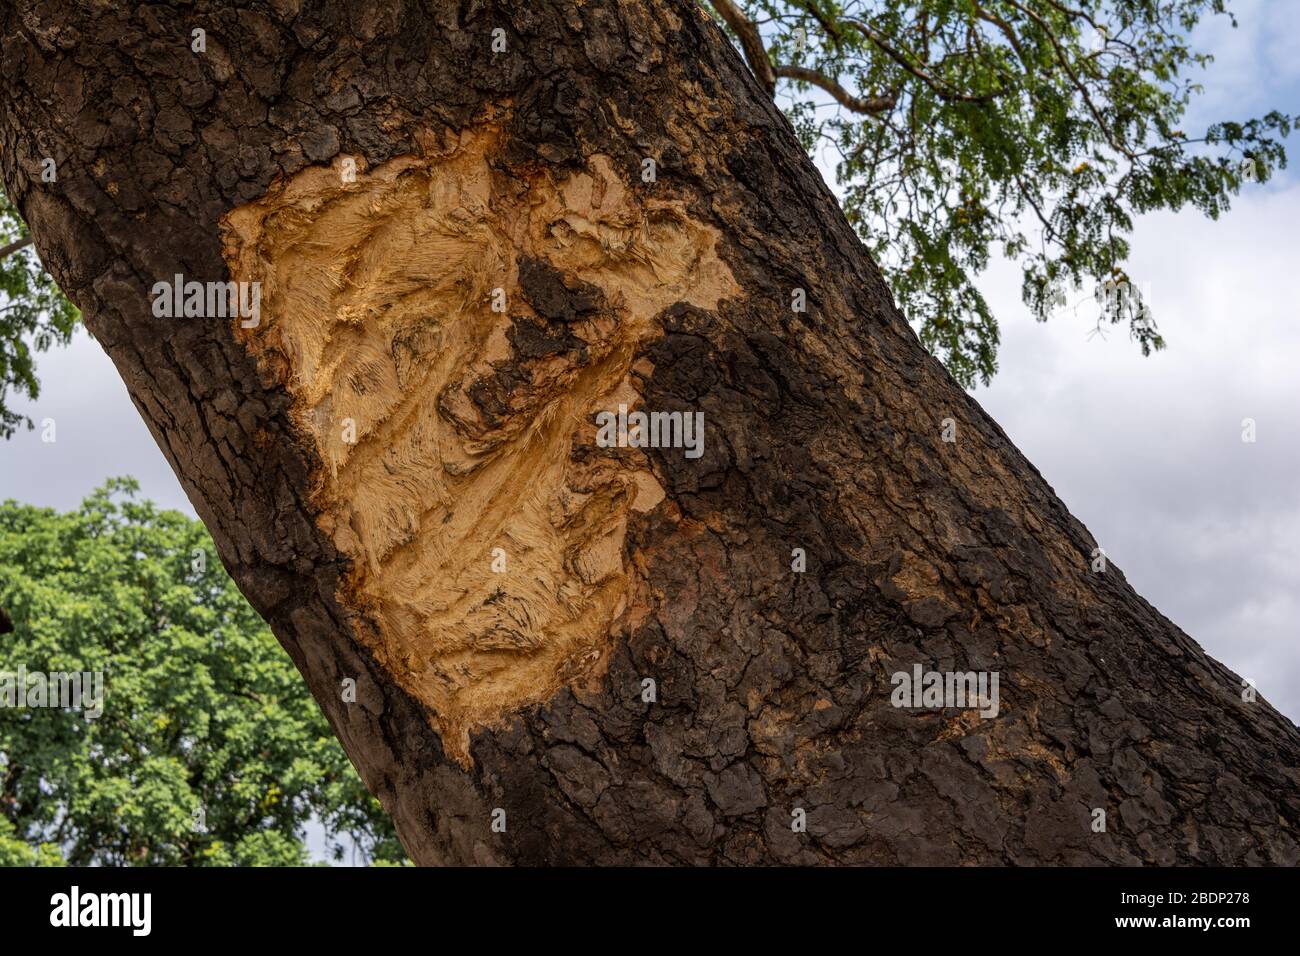 Elephant tusk damage to the bark of a tree Stock Photo